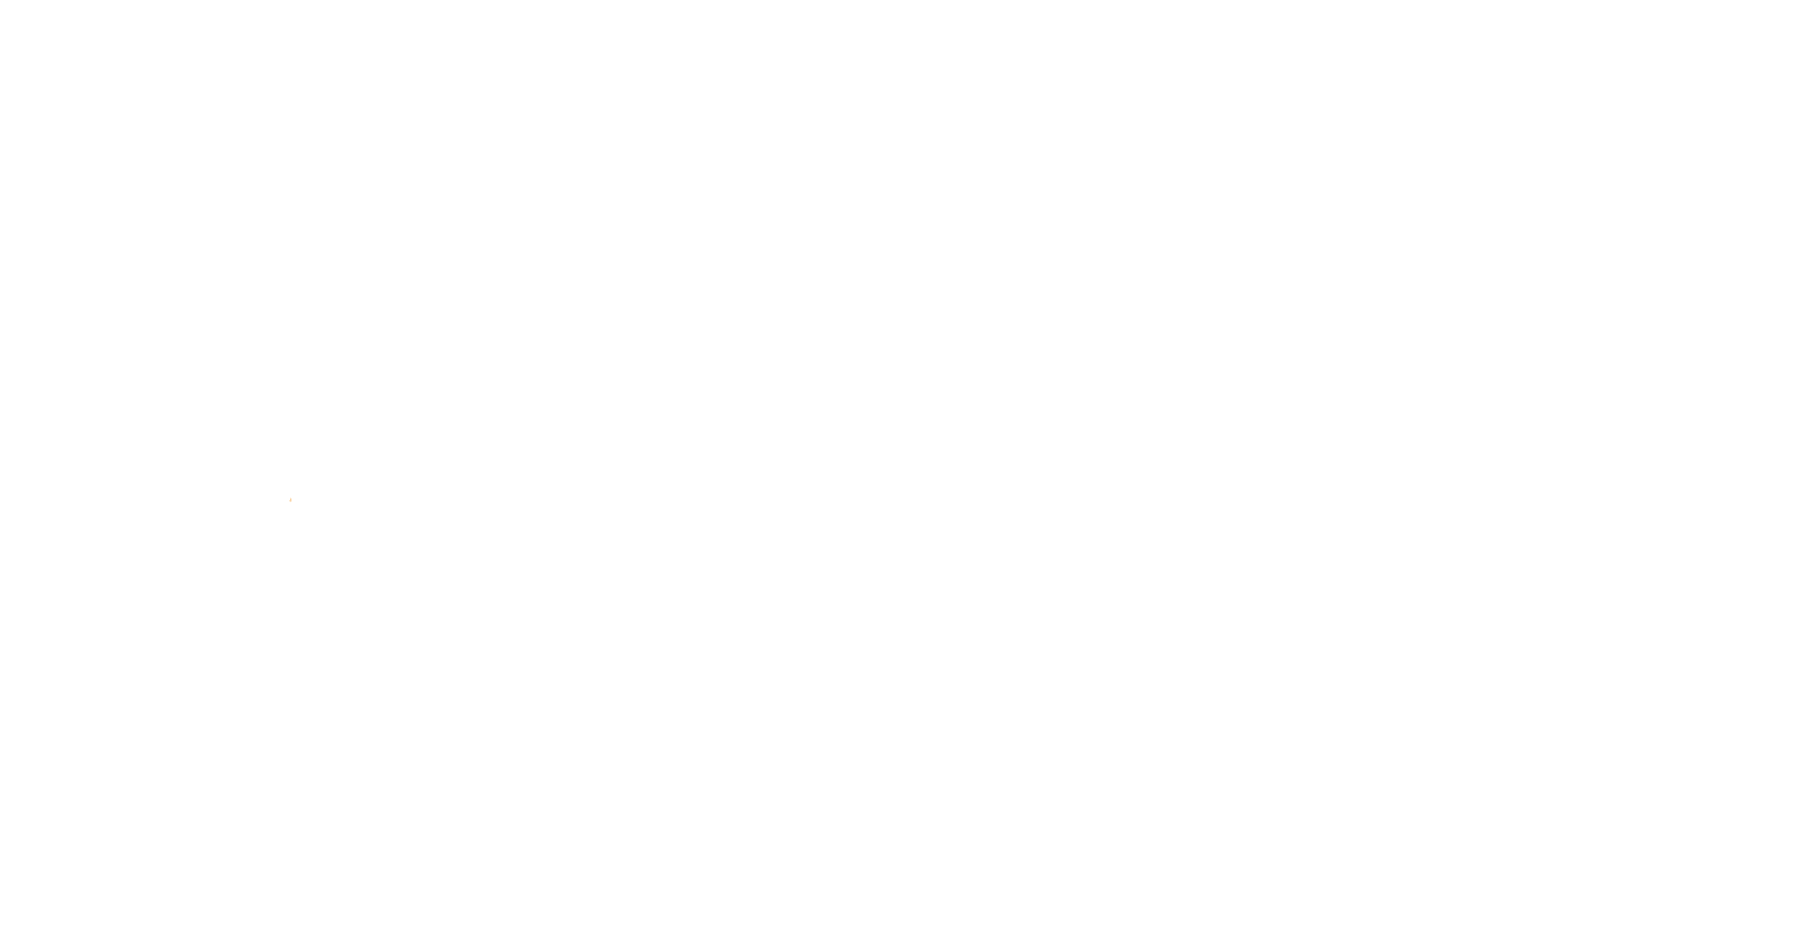 Cyber Guru